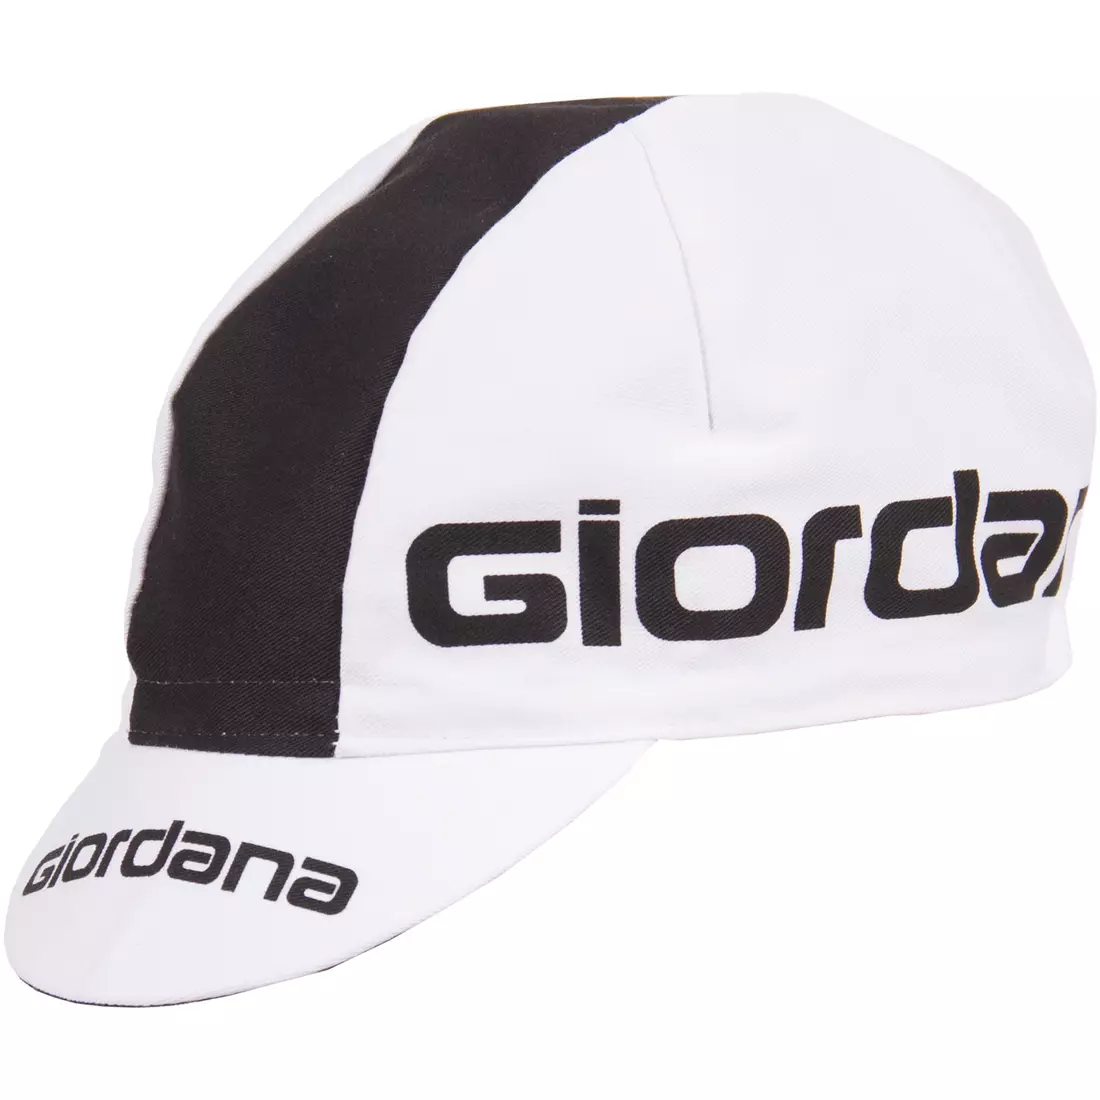 Şapcă de ciclism GIORDANA SS18 - Logo Giordana - Alb/Negru GI-S5-COCA-GIOR-WTBK mărime unică